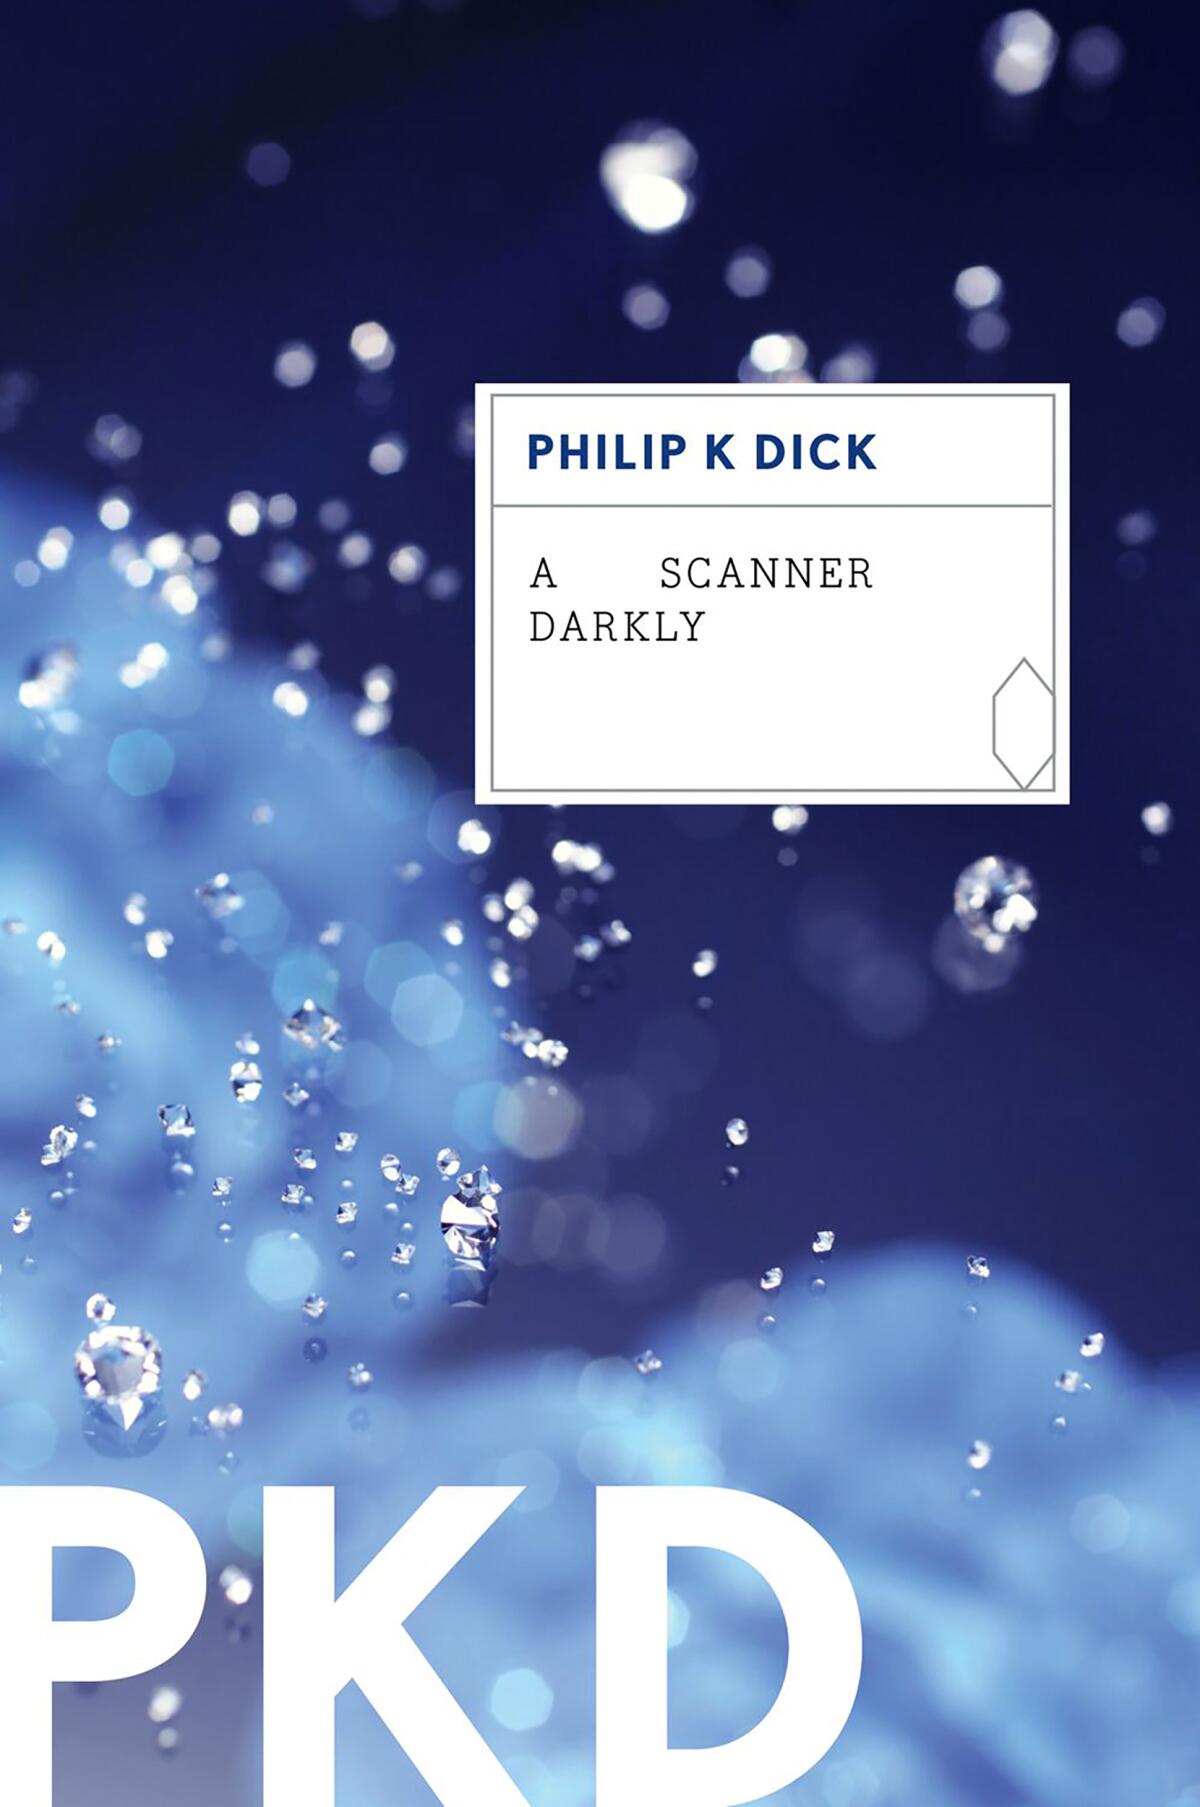 "A Scanner Darkly" by Philip K. Dick